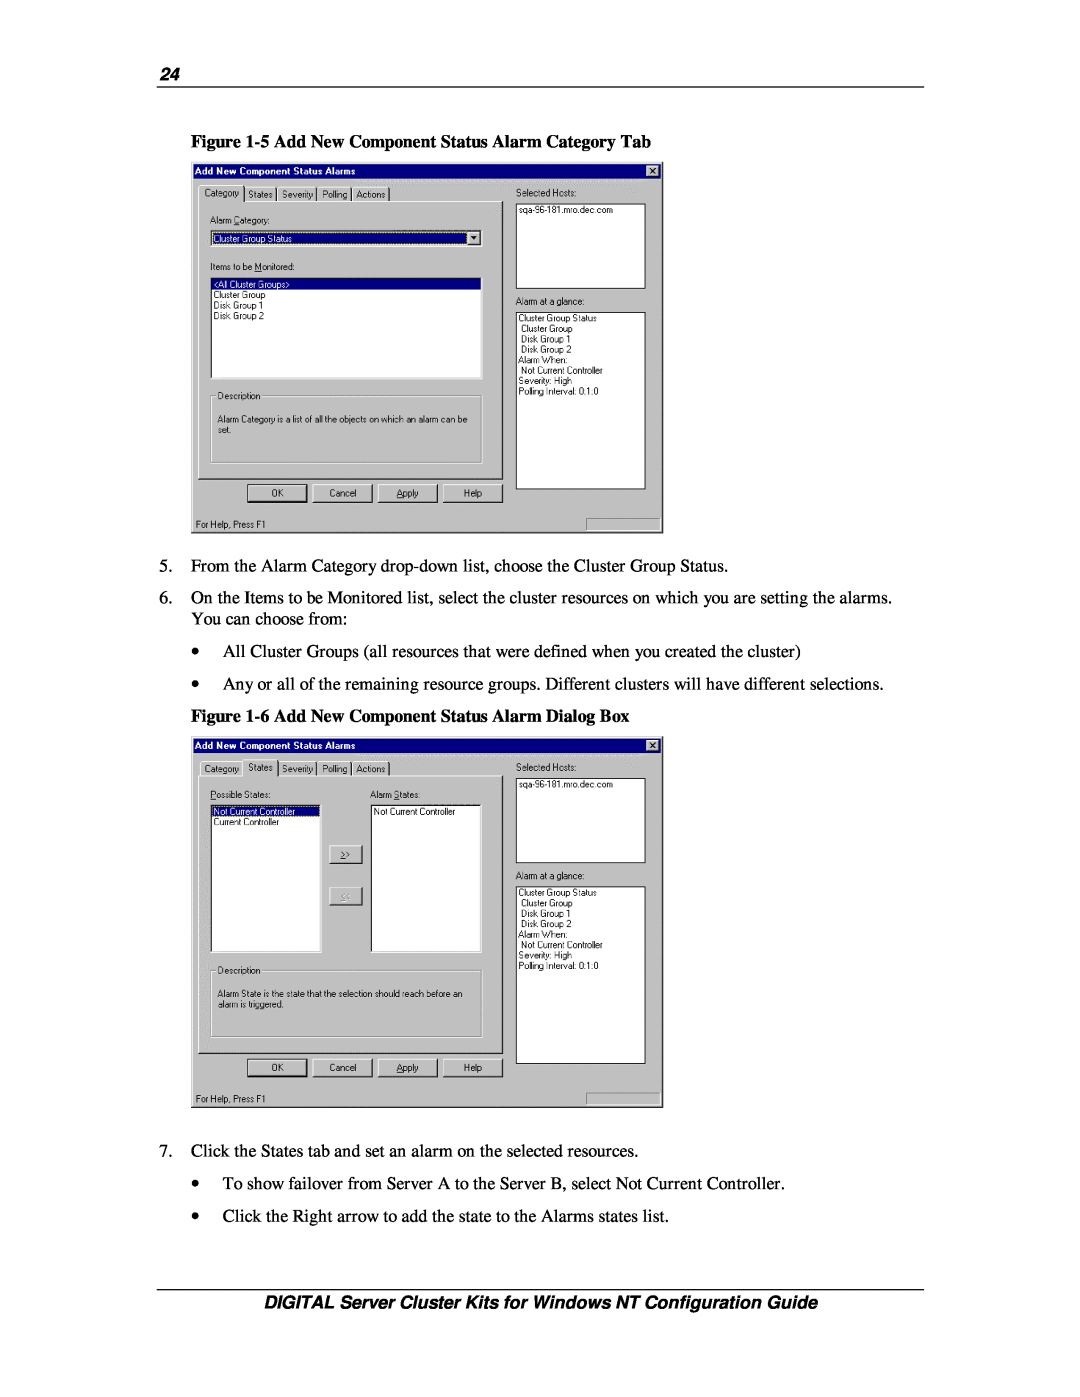 Compaq DIGITAL Server Cluster Kits for Windows NT manual 5 Add New Component Status Alarm Category Tab 